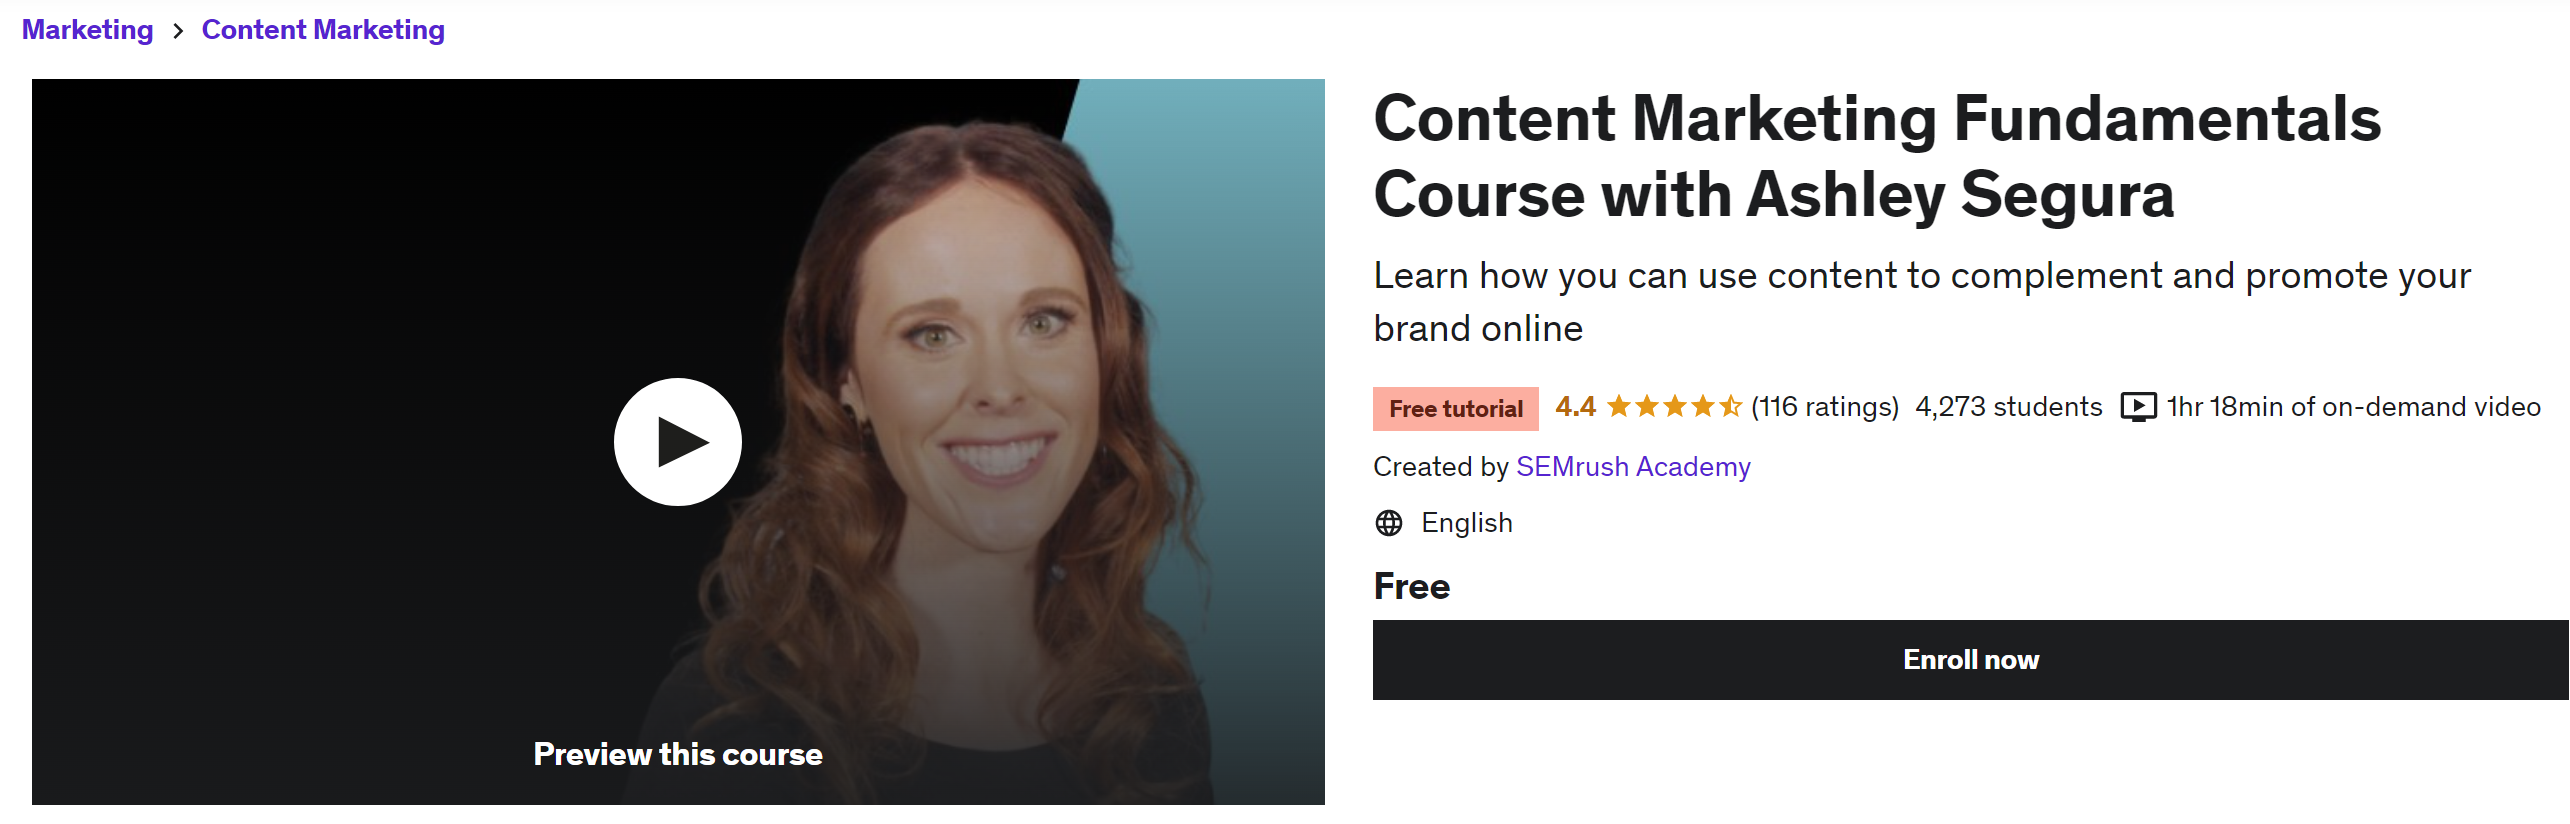 Content Marketing Fundamentals Course